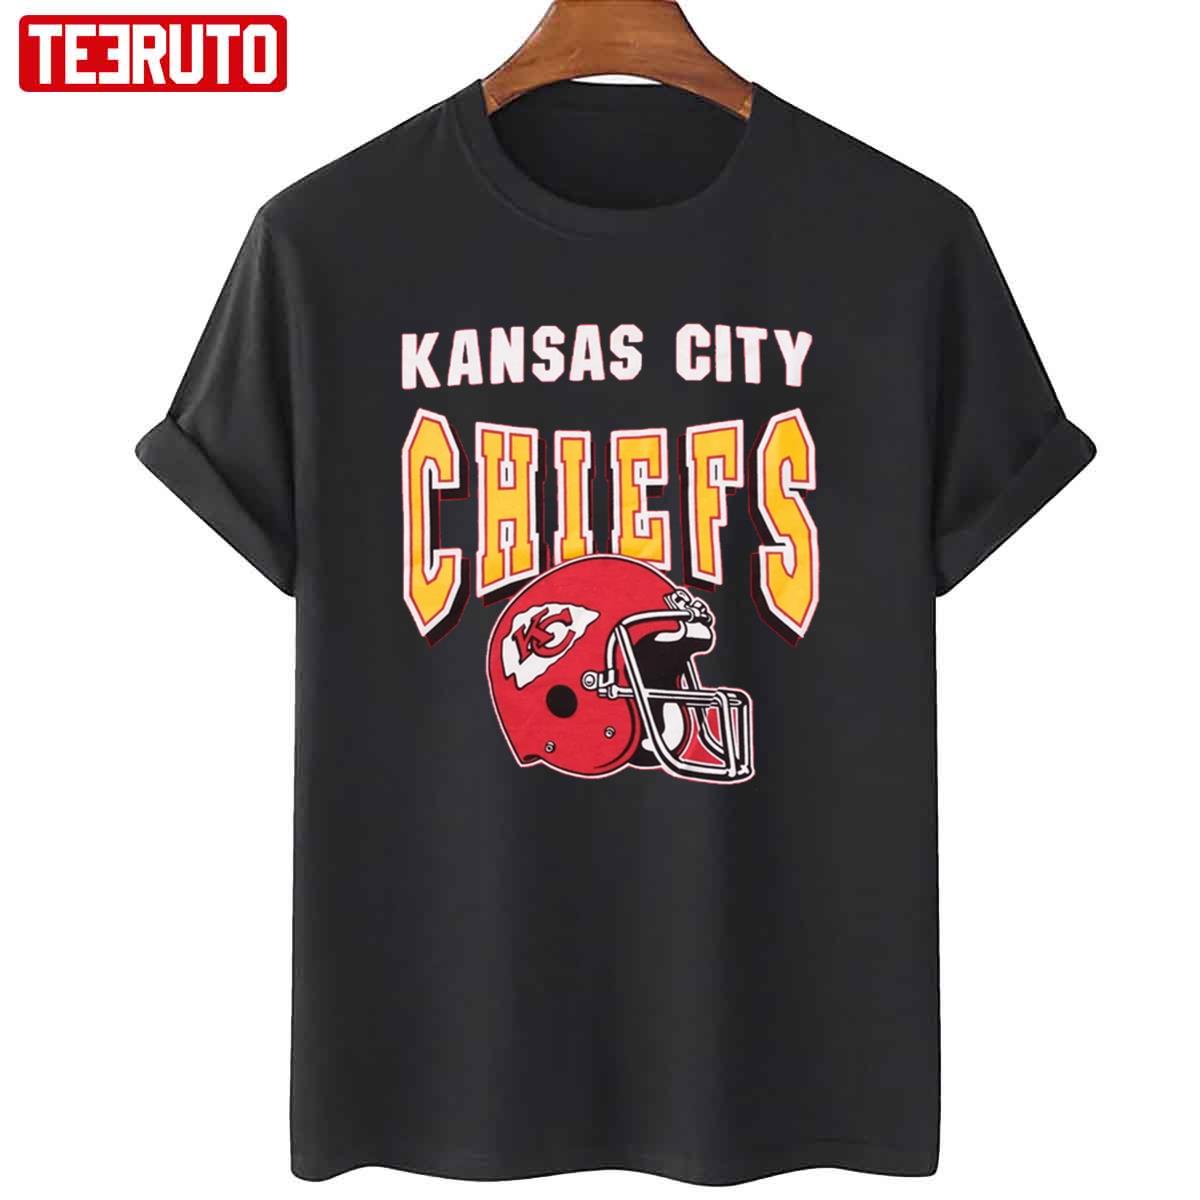 kansas city chiefs vintage t shirt